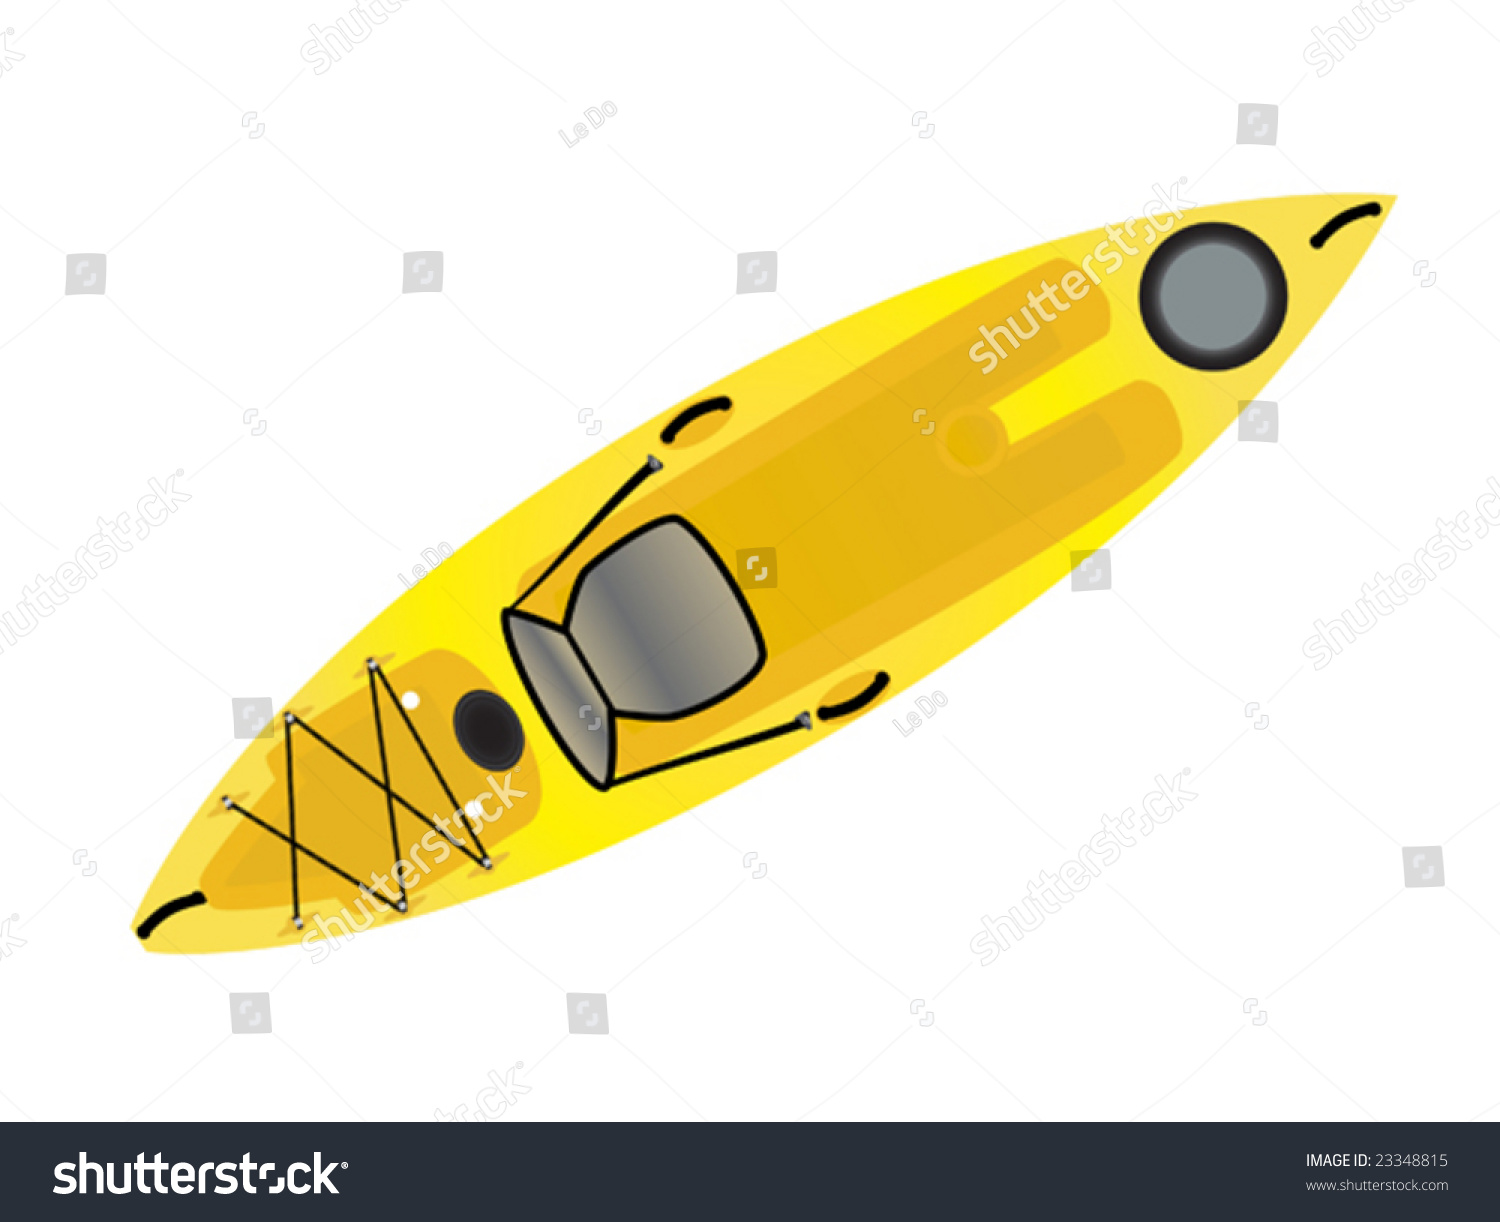 clipart kayak image - photo #27